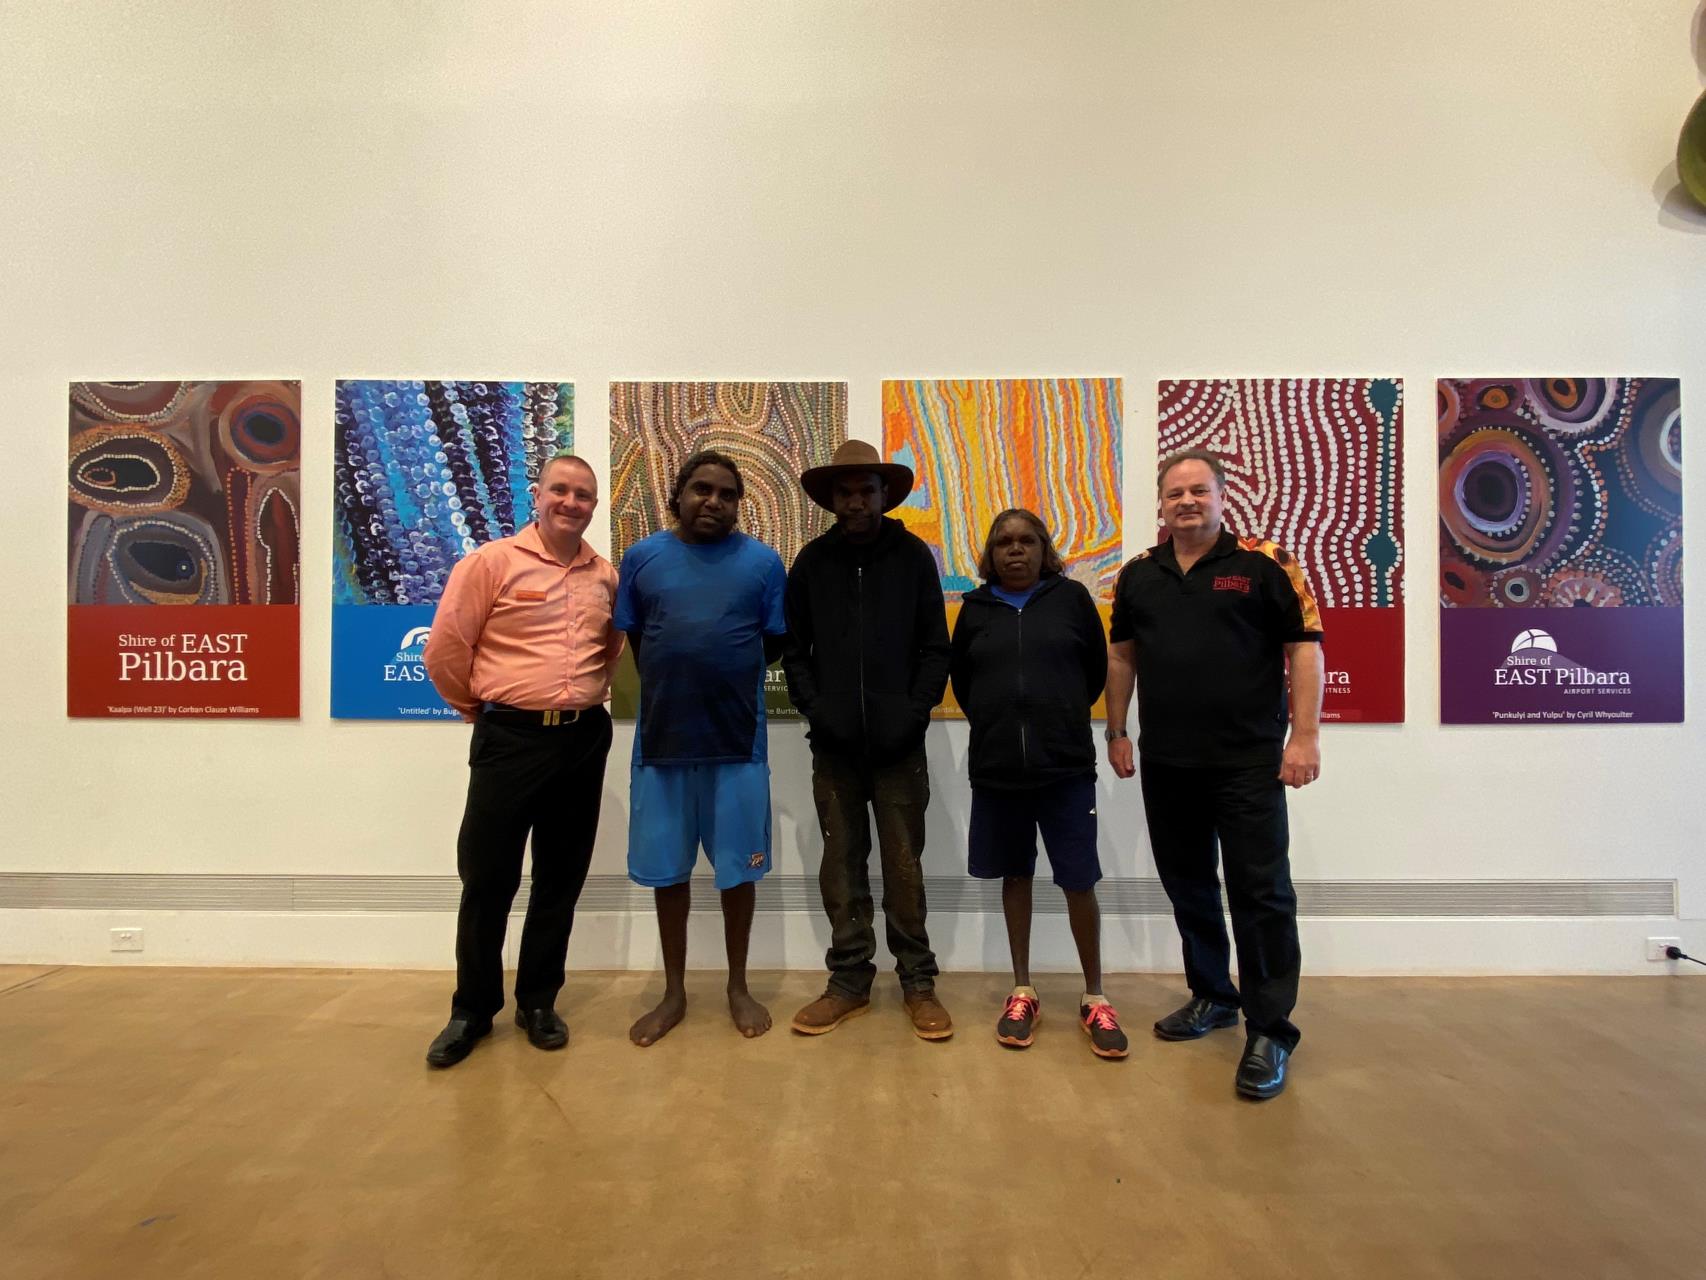 New Shire Of East Pilbara Brand Incorporating Aboriginal Artwork Launched